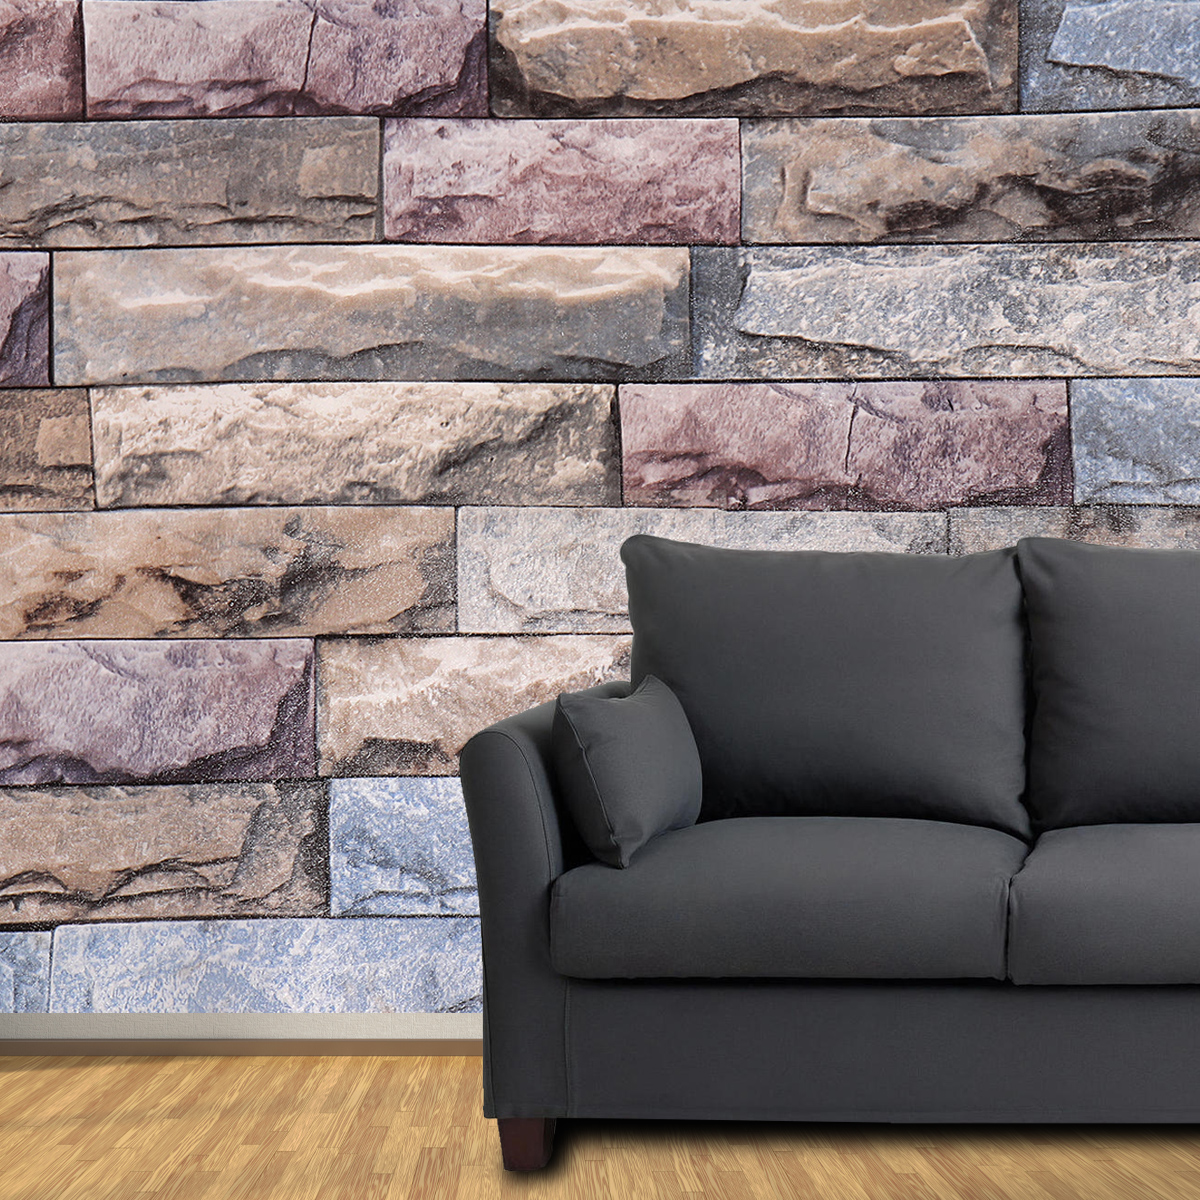 3D-Simulation-Brick-Wall-Paper-Self-Adhesive-Brick-Stone-Wallpaper-Fashion-Restaurant-Hotel-Store-De-1859008-12